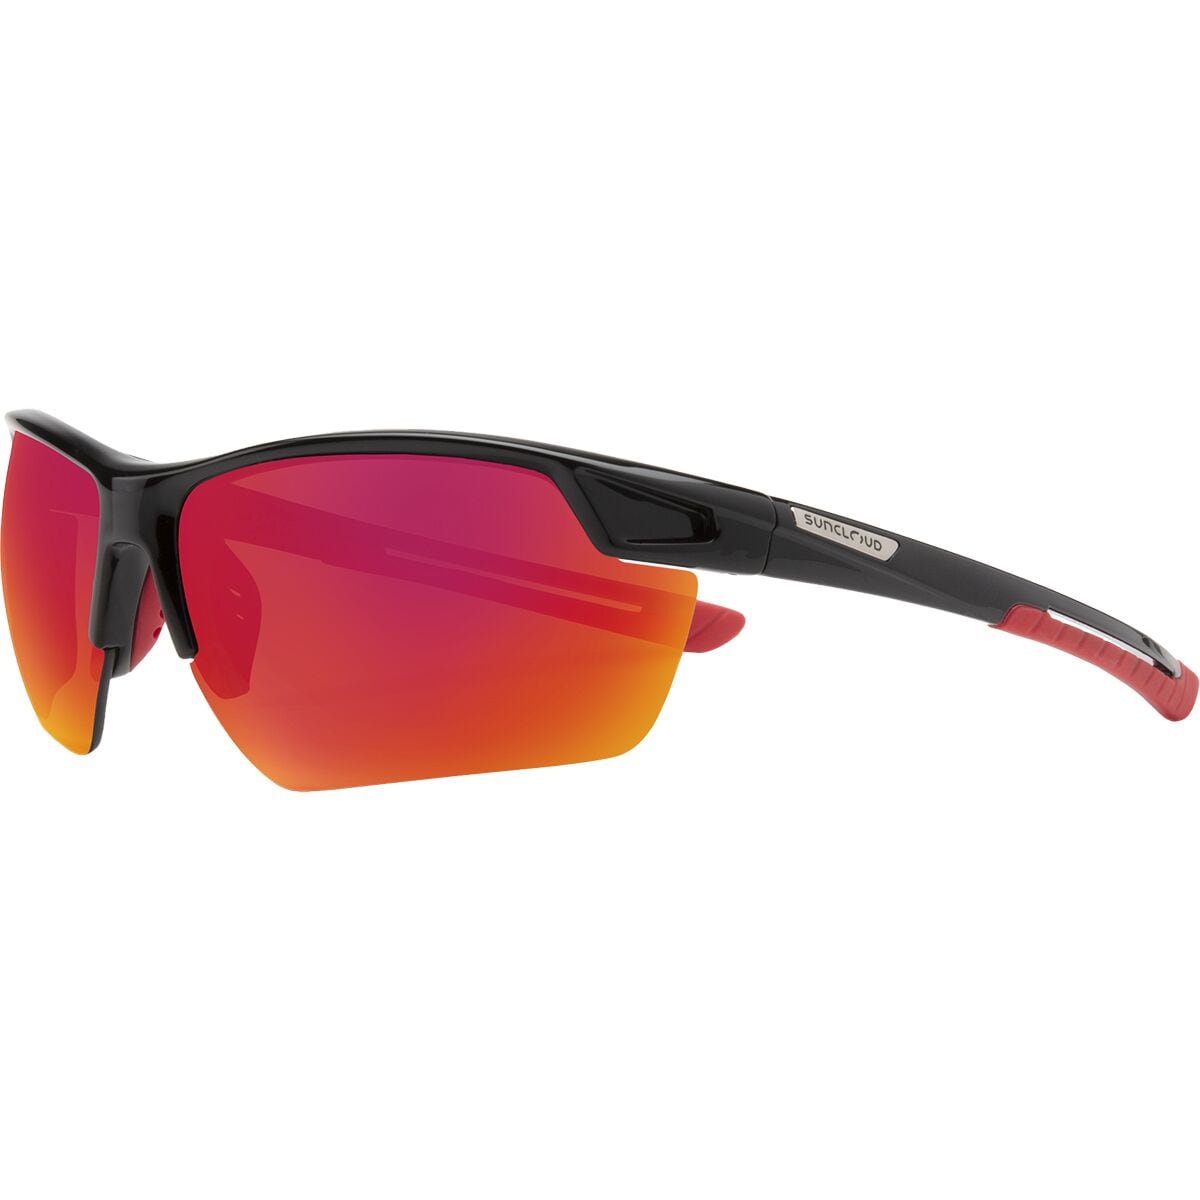 Поляризованные солнцезащитные очки contender Suncloud Polarized Optics, цвет black/polarized red mirror очки солнцезащитные stylemark polarized l2480d